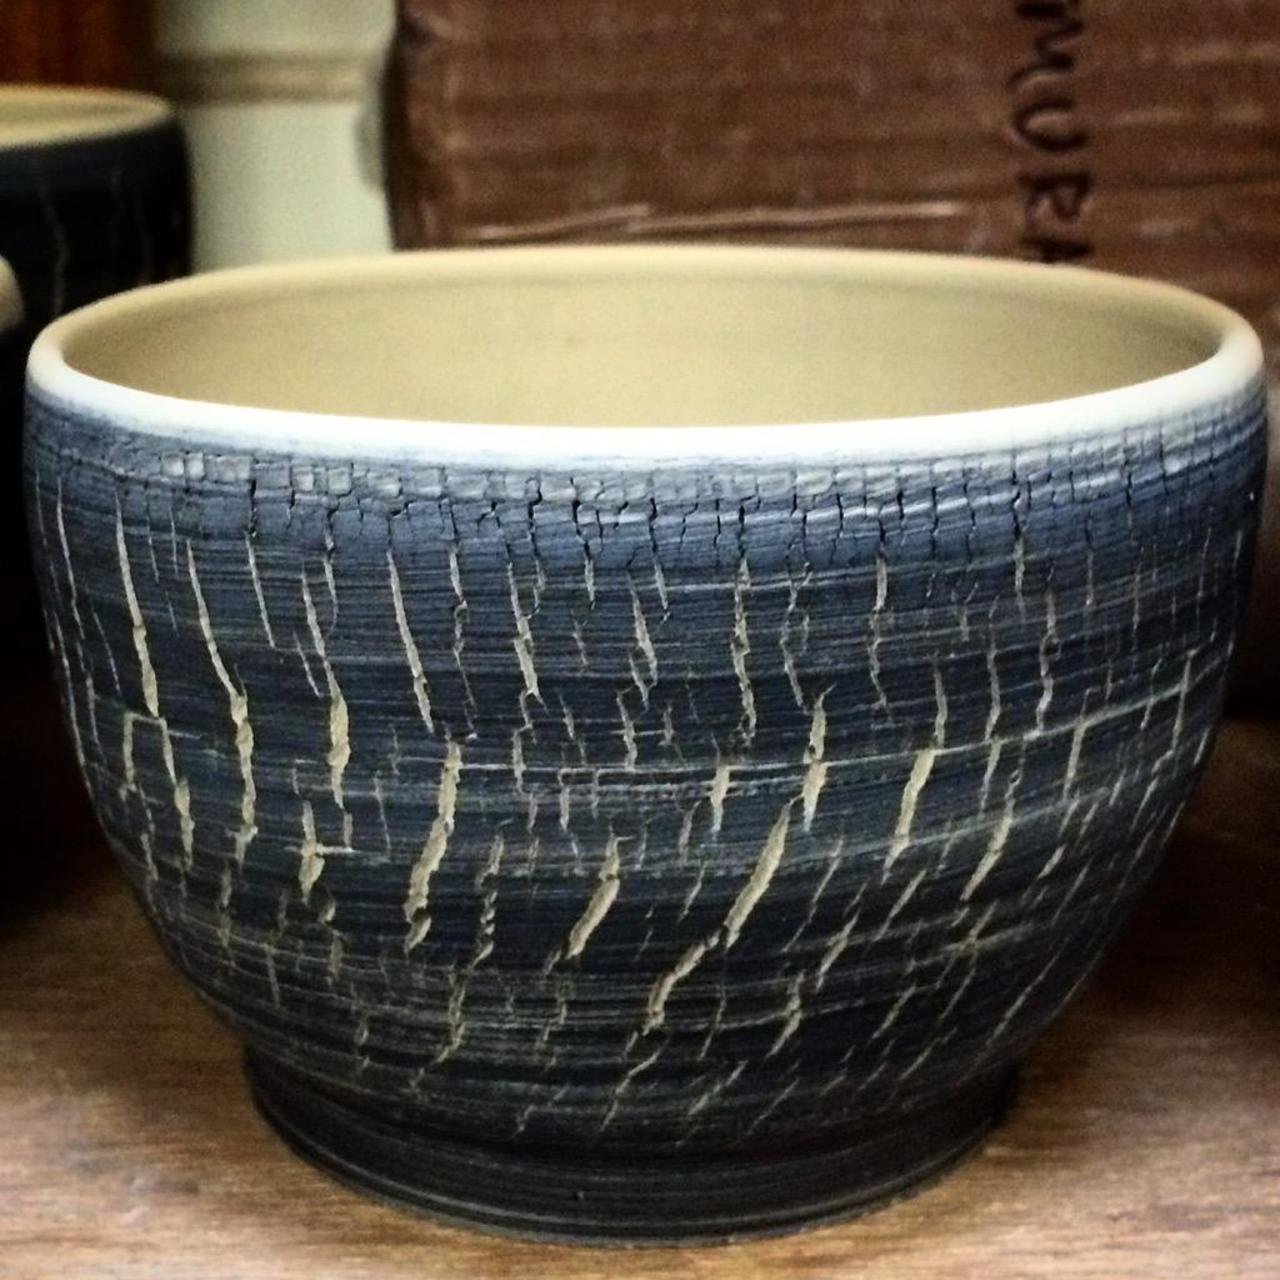 #New #porcelain #ceramics #pottery #art @@AMOCAmuseum http://t.co/Hq5fXujhXV